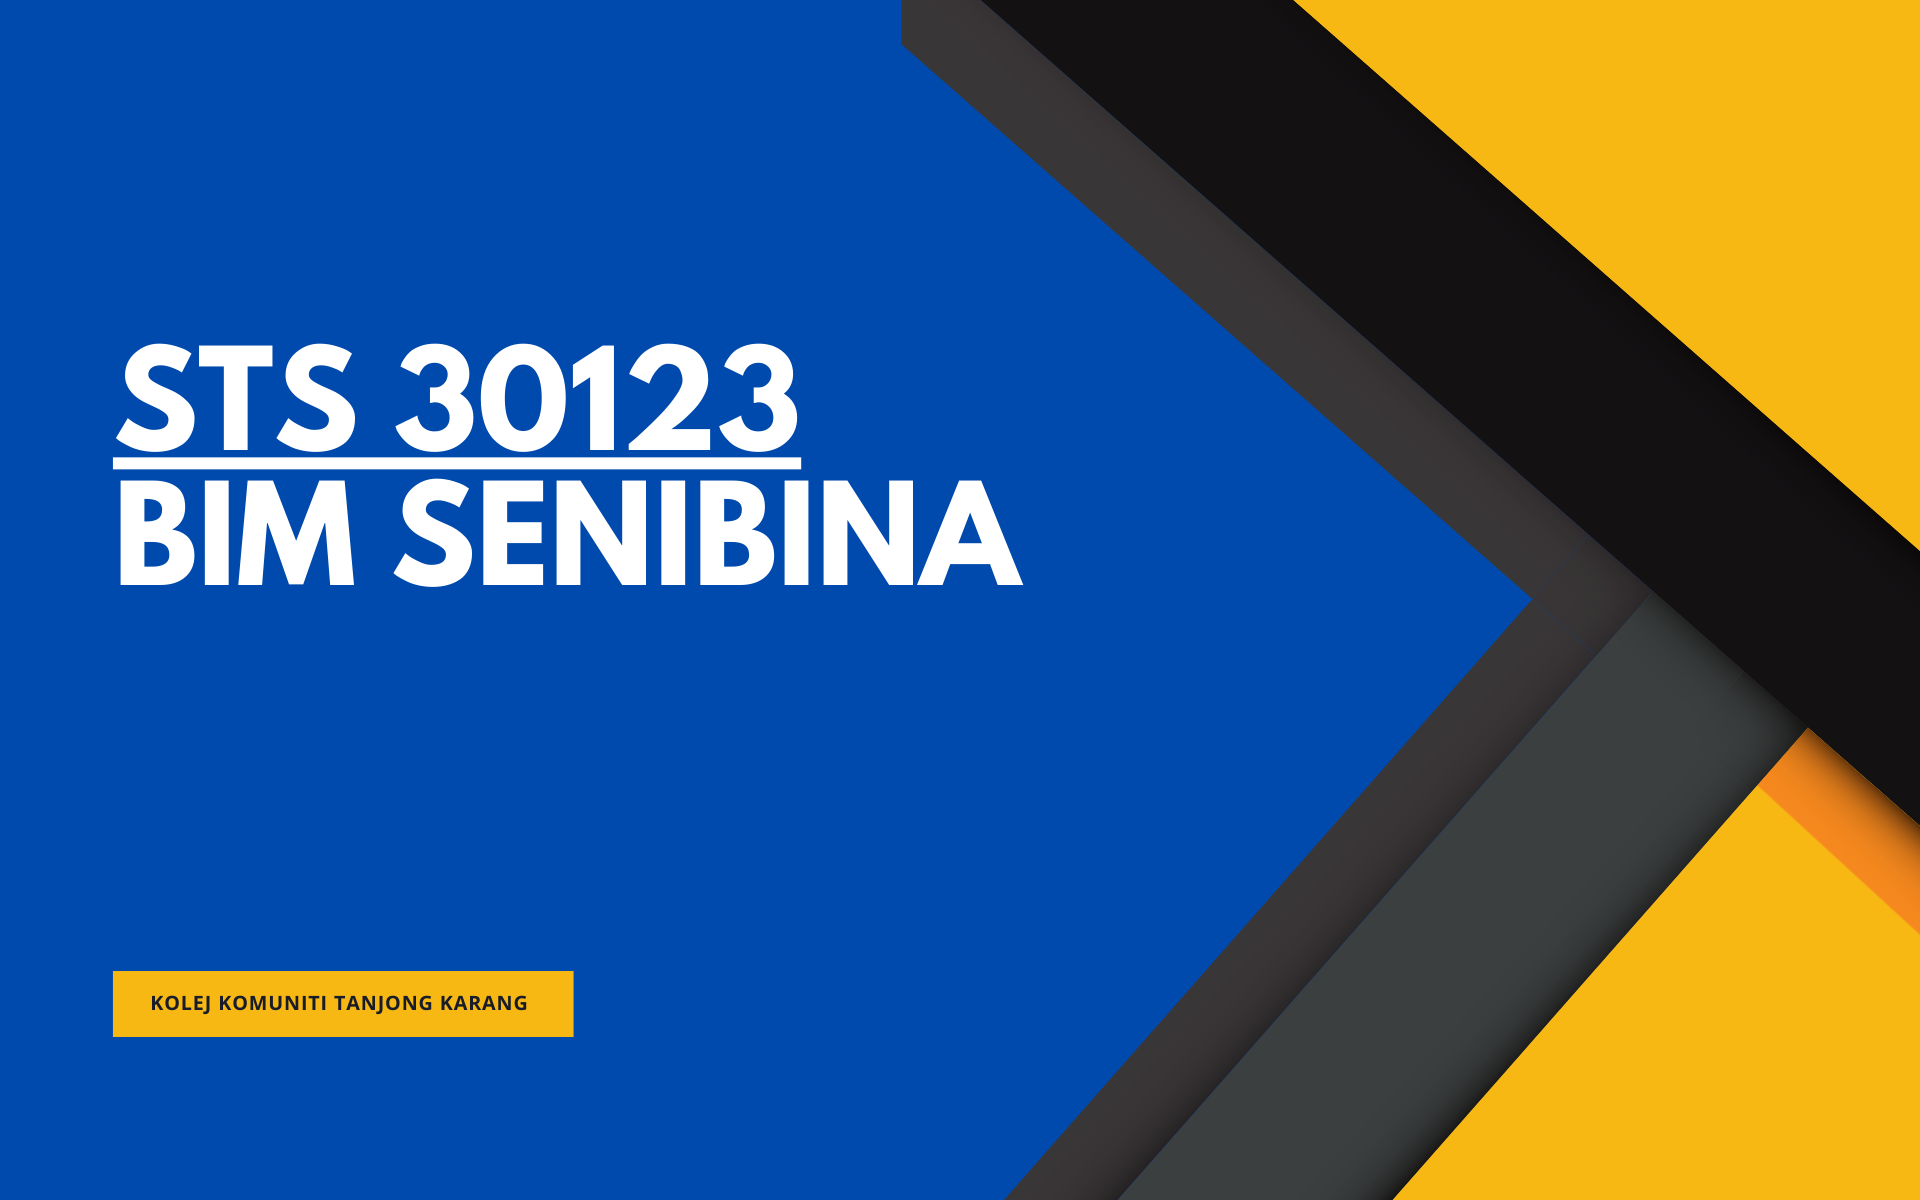 STS 30123 BIM SENIBINA